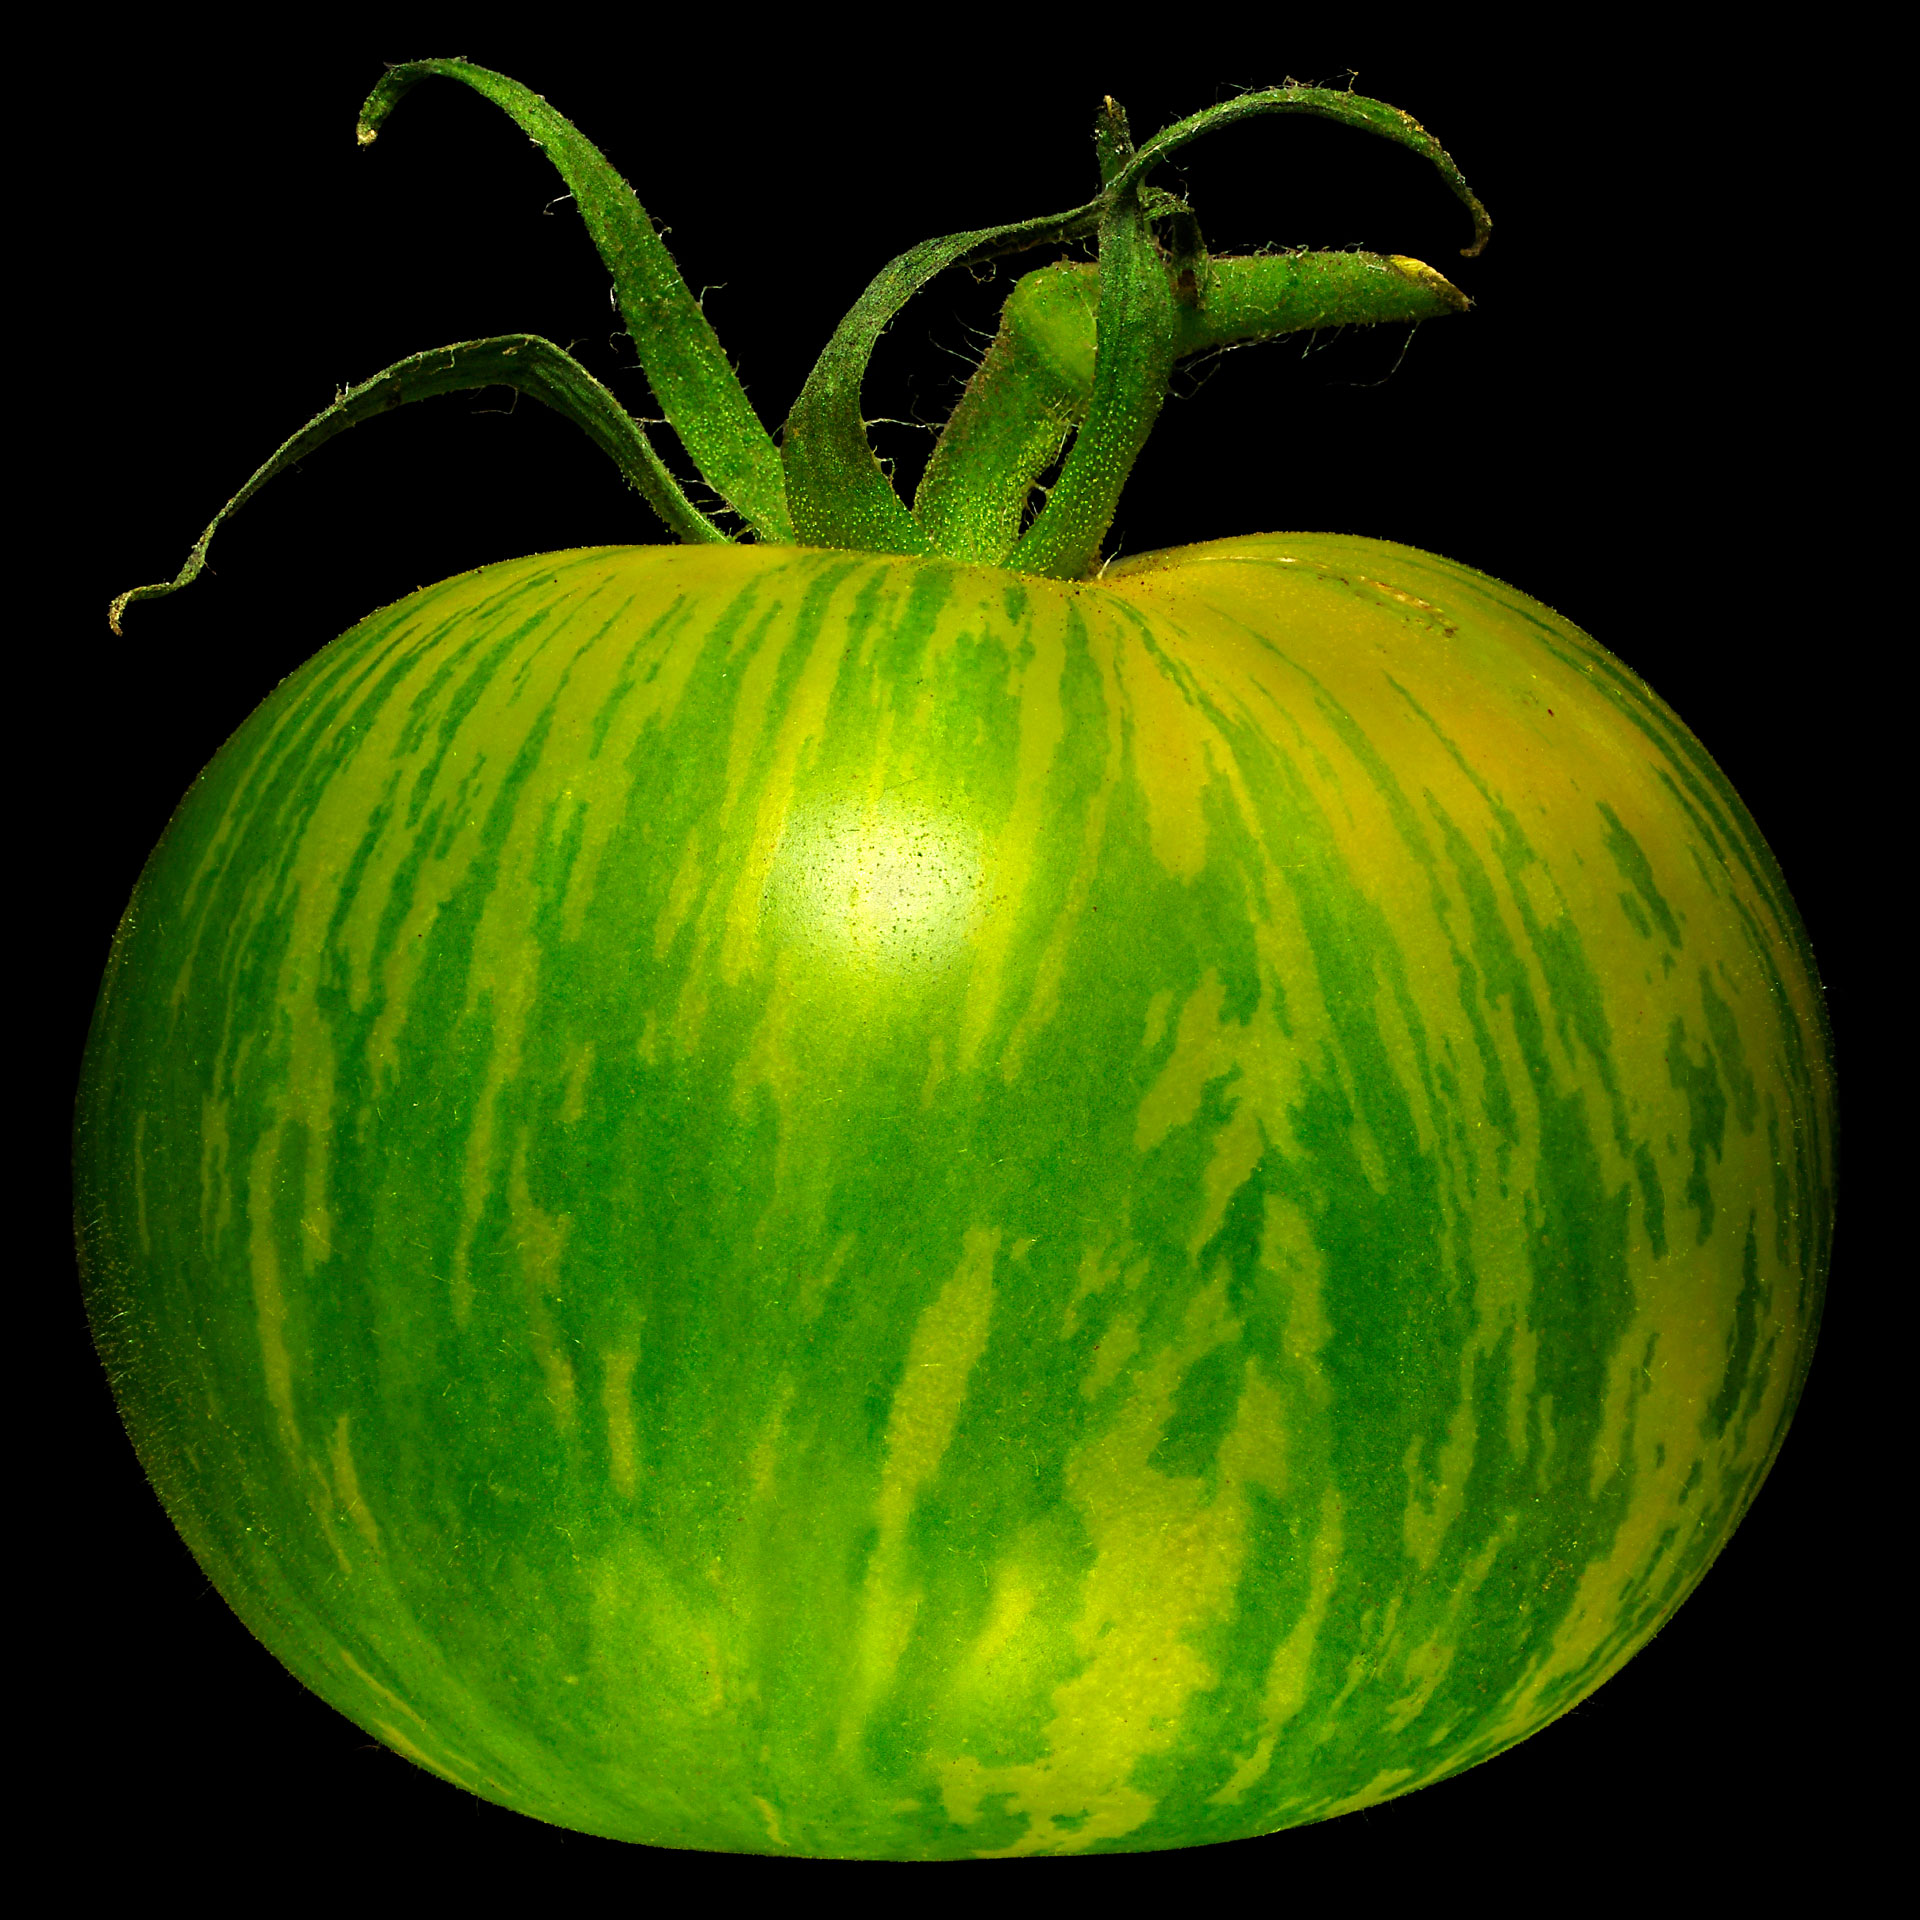 Green Zebra (striped tomato): Solanum lycopersicum ‘Green Zebra’